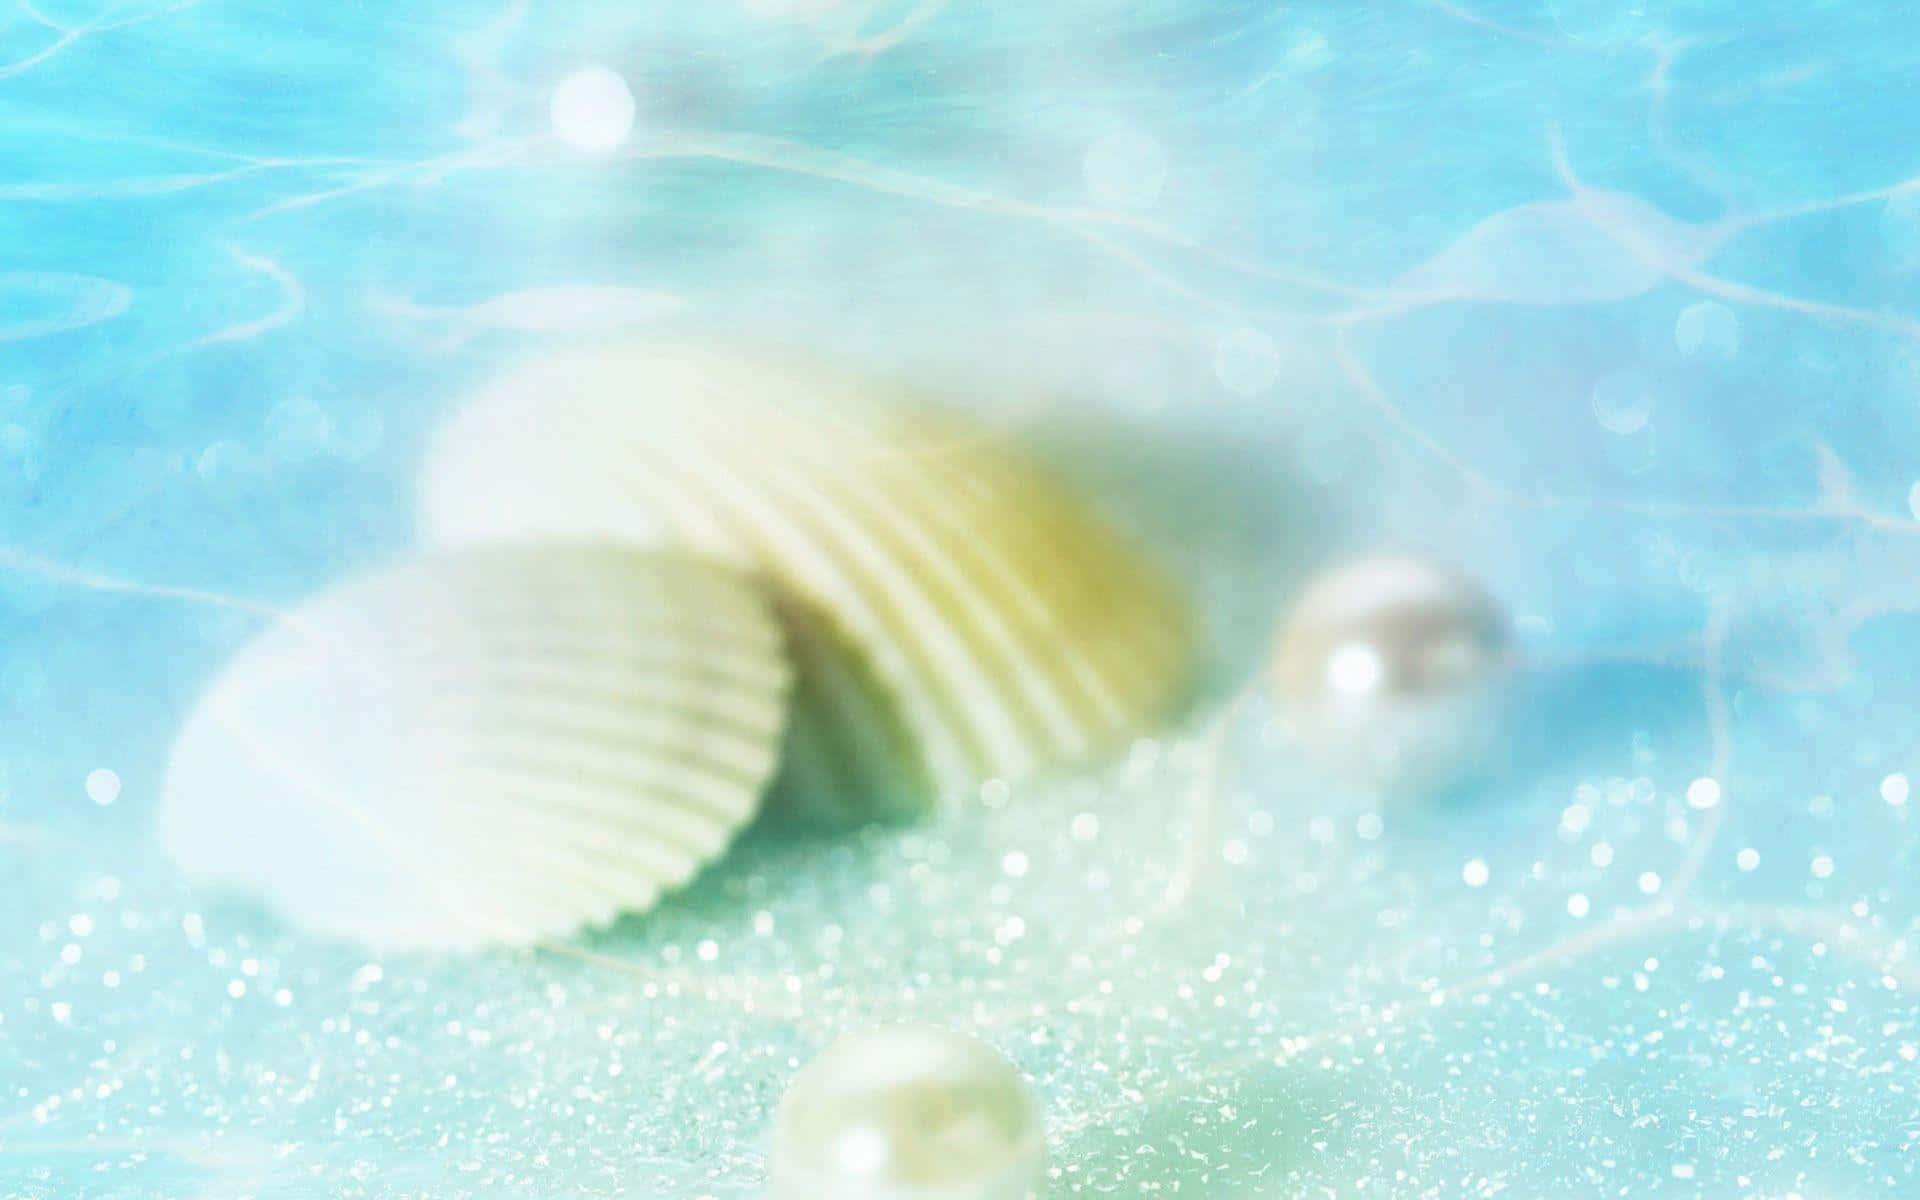 An Elegant Display of Seashells on the Beach